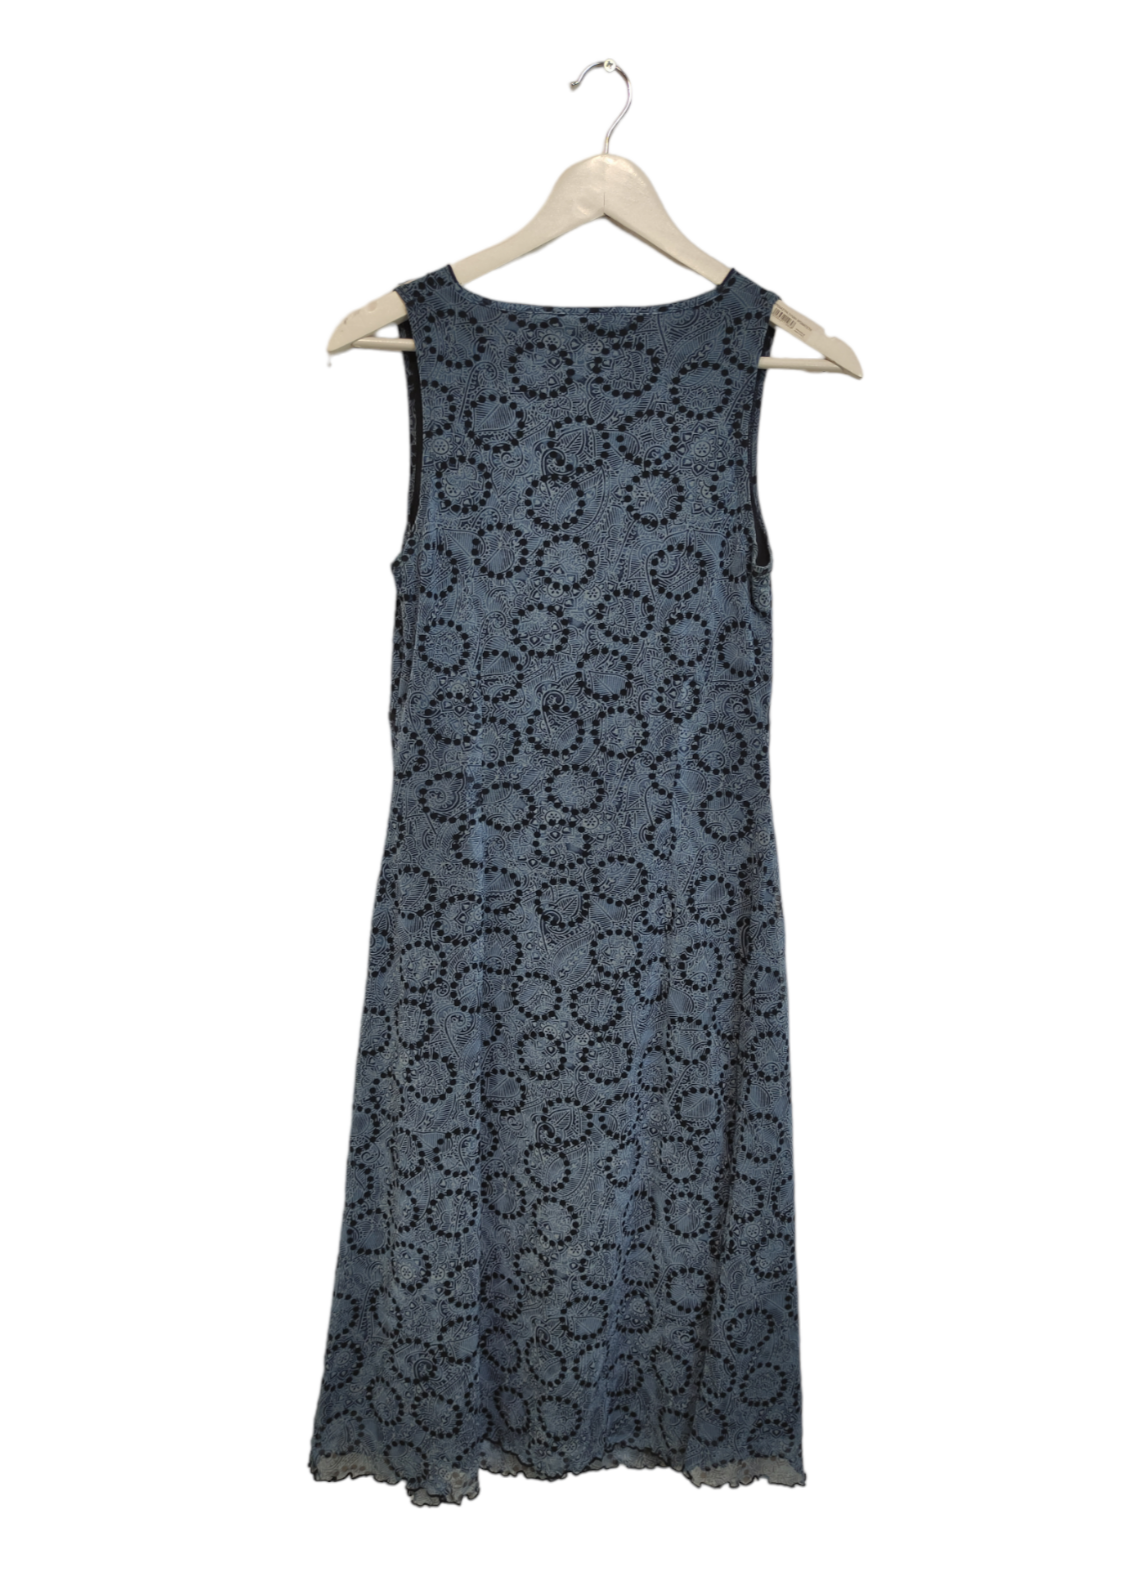 Aμάνικο Φλοράλ Φόρεμα ΜΕΧΧ σε Μπλε -Γαλάζια Χρώματα (Small)